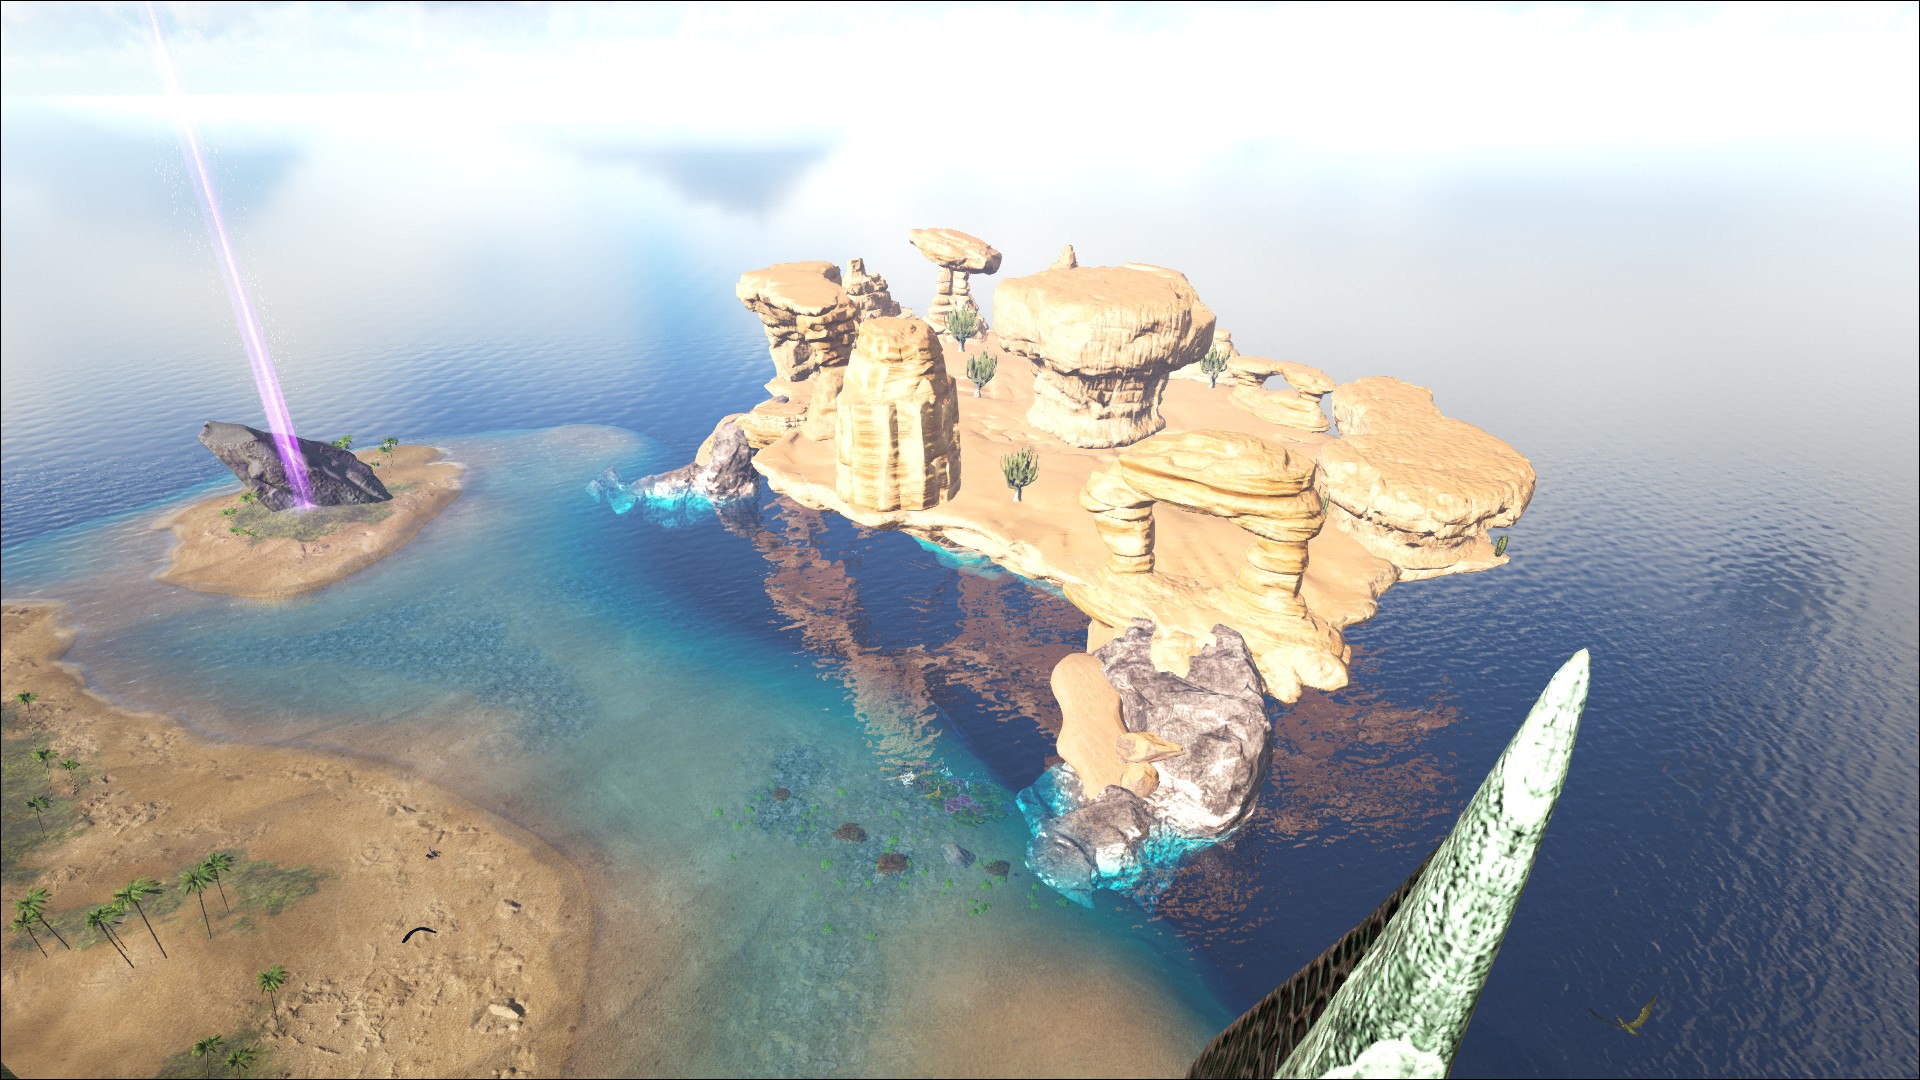 Steam Workshop Wyvern Crevasse And Deathworm Island Map Extension For The Island